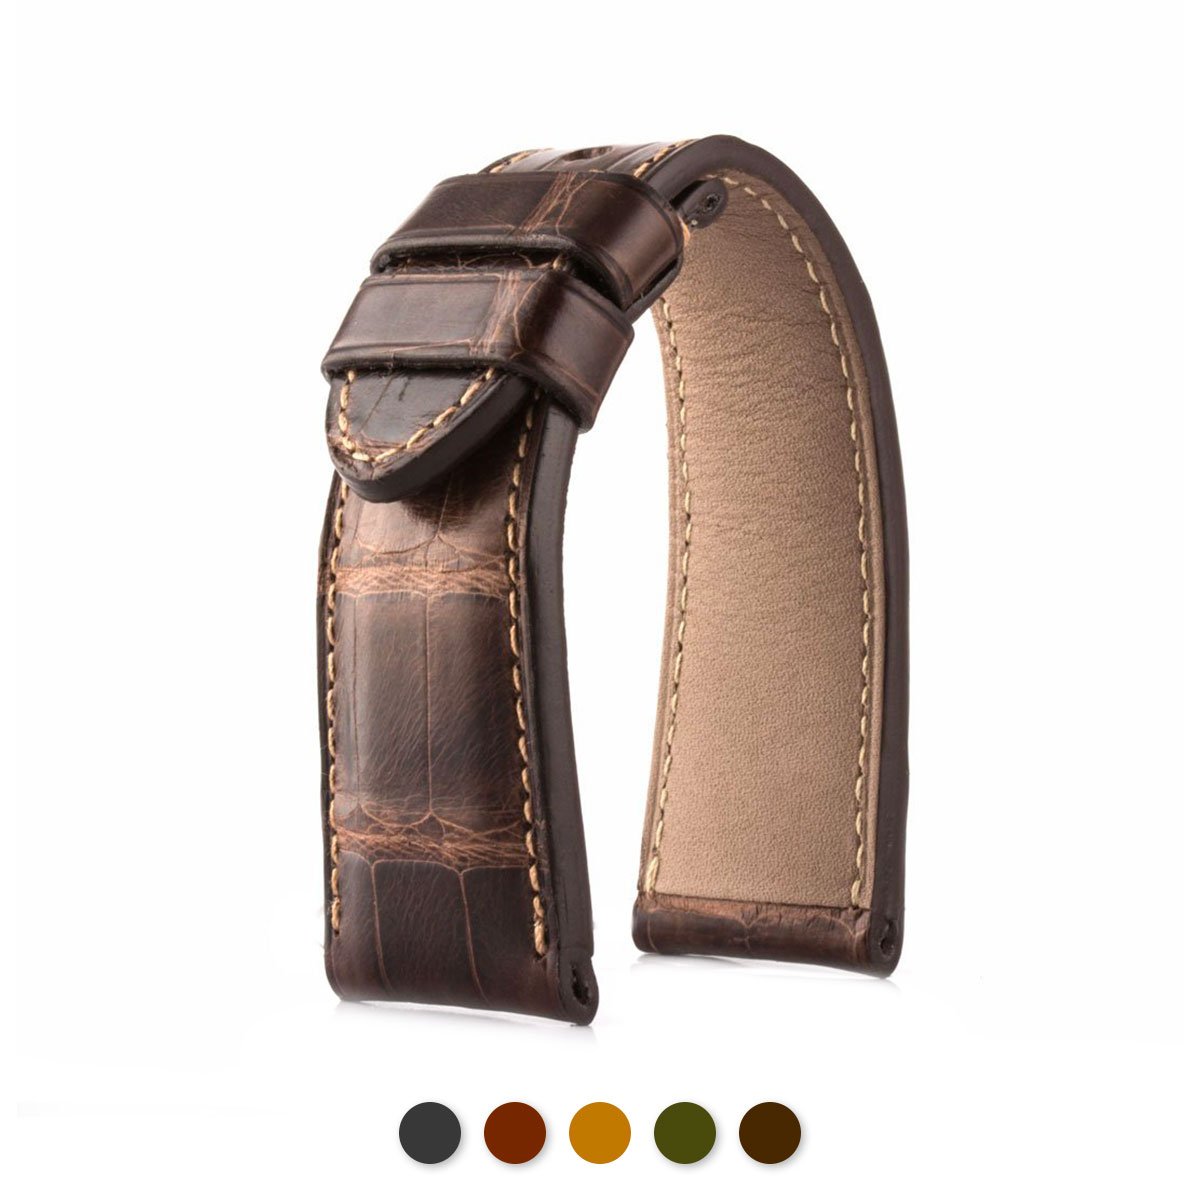 Panerai Radiomir & Luminor - Bracelet de montre cuir - Alligator waxé (gris, marron, vert) - watch band leather strap - ABP Concept -